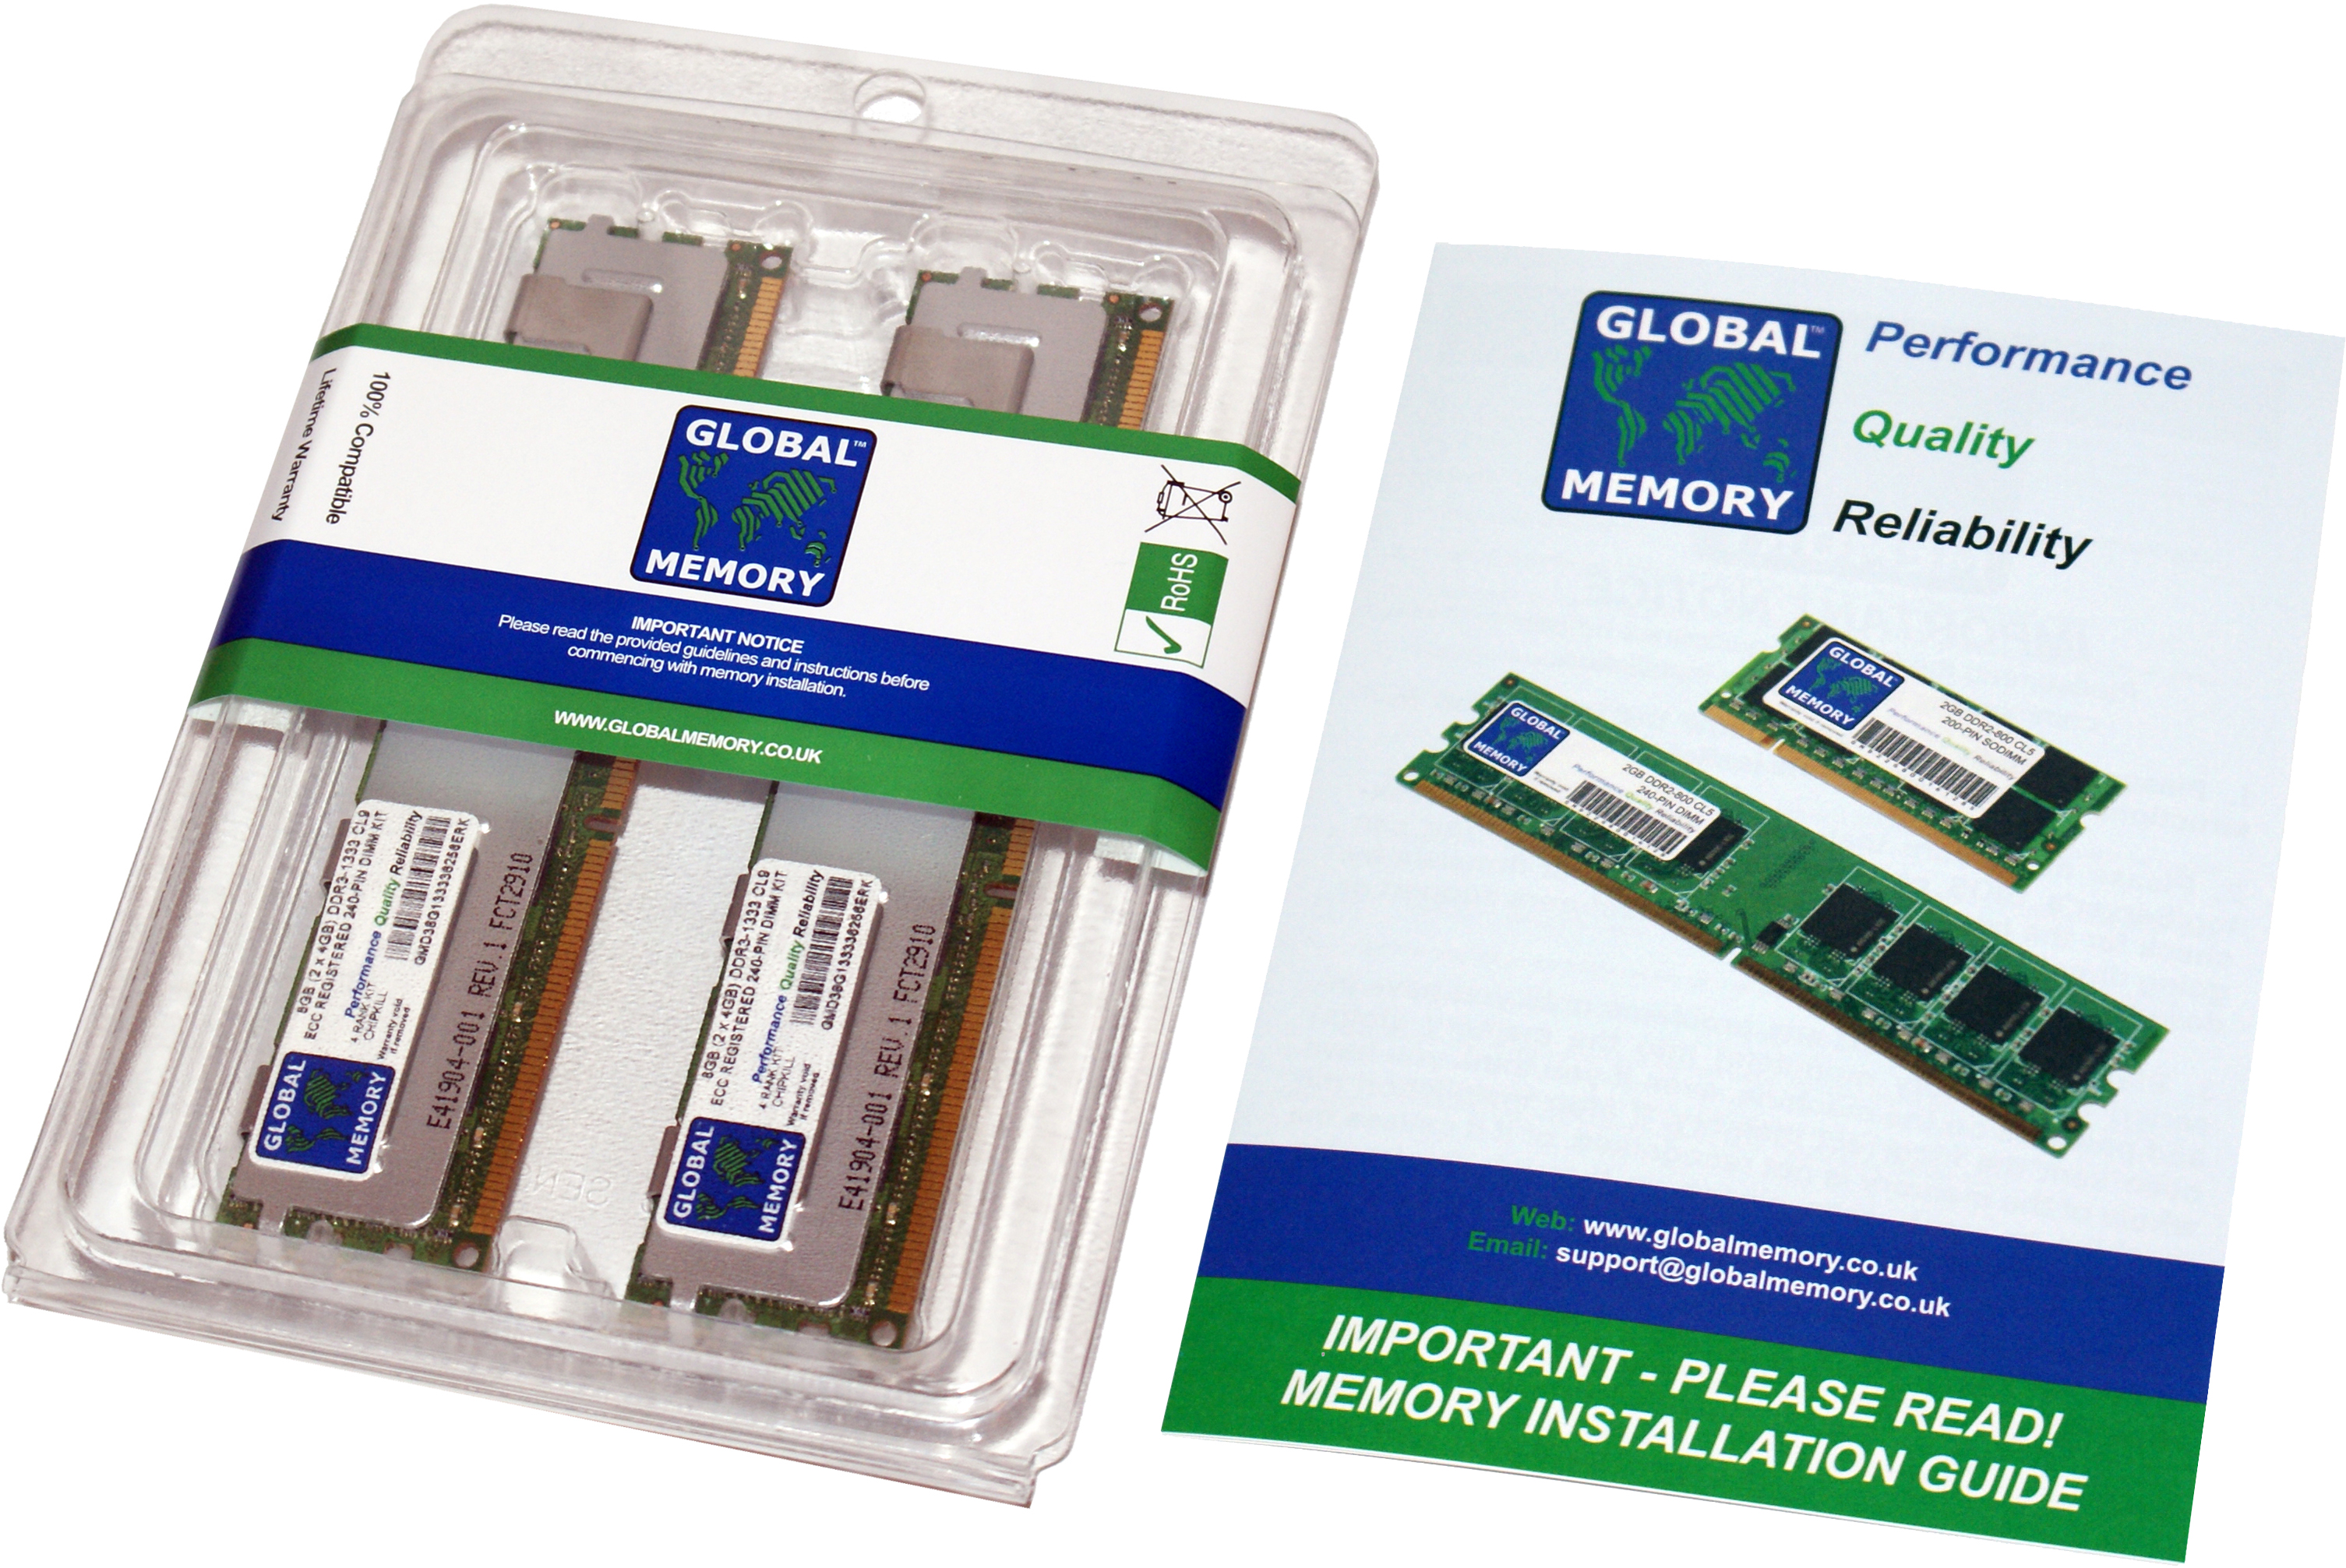 32GB (2 x 16GB) DDR3 1333MHz PC3-10600 240-PIN ECC REGISTERED DIMM (RDIMM) MEMORY RAM KIT FOR DELL SERVERS/WORKSTATIONS (8 RANK KIT NON-CHIPKILL)